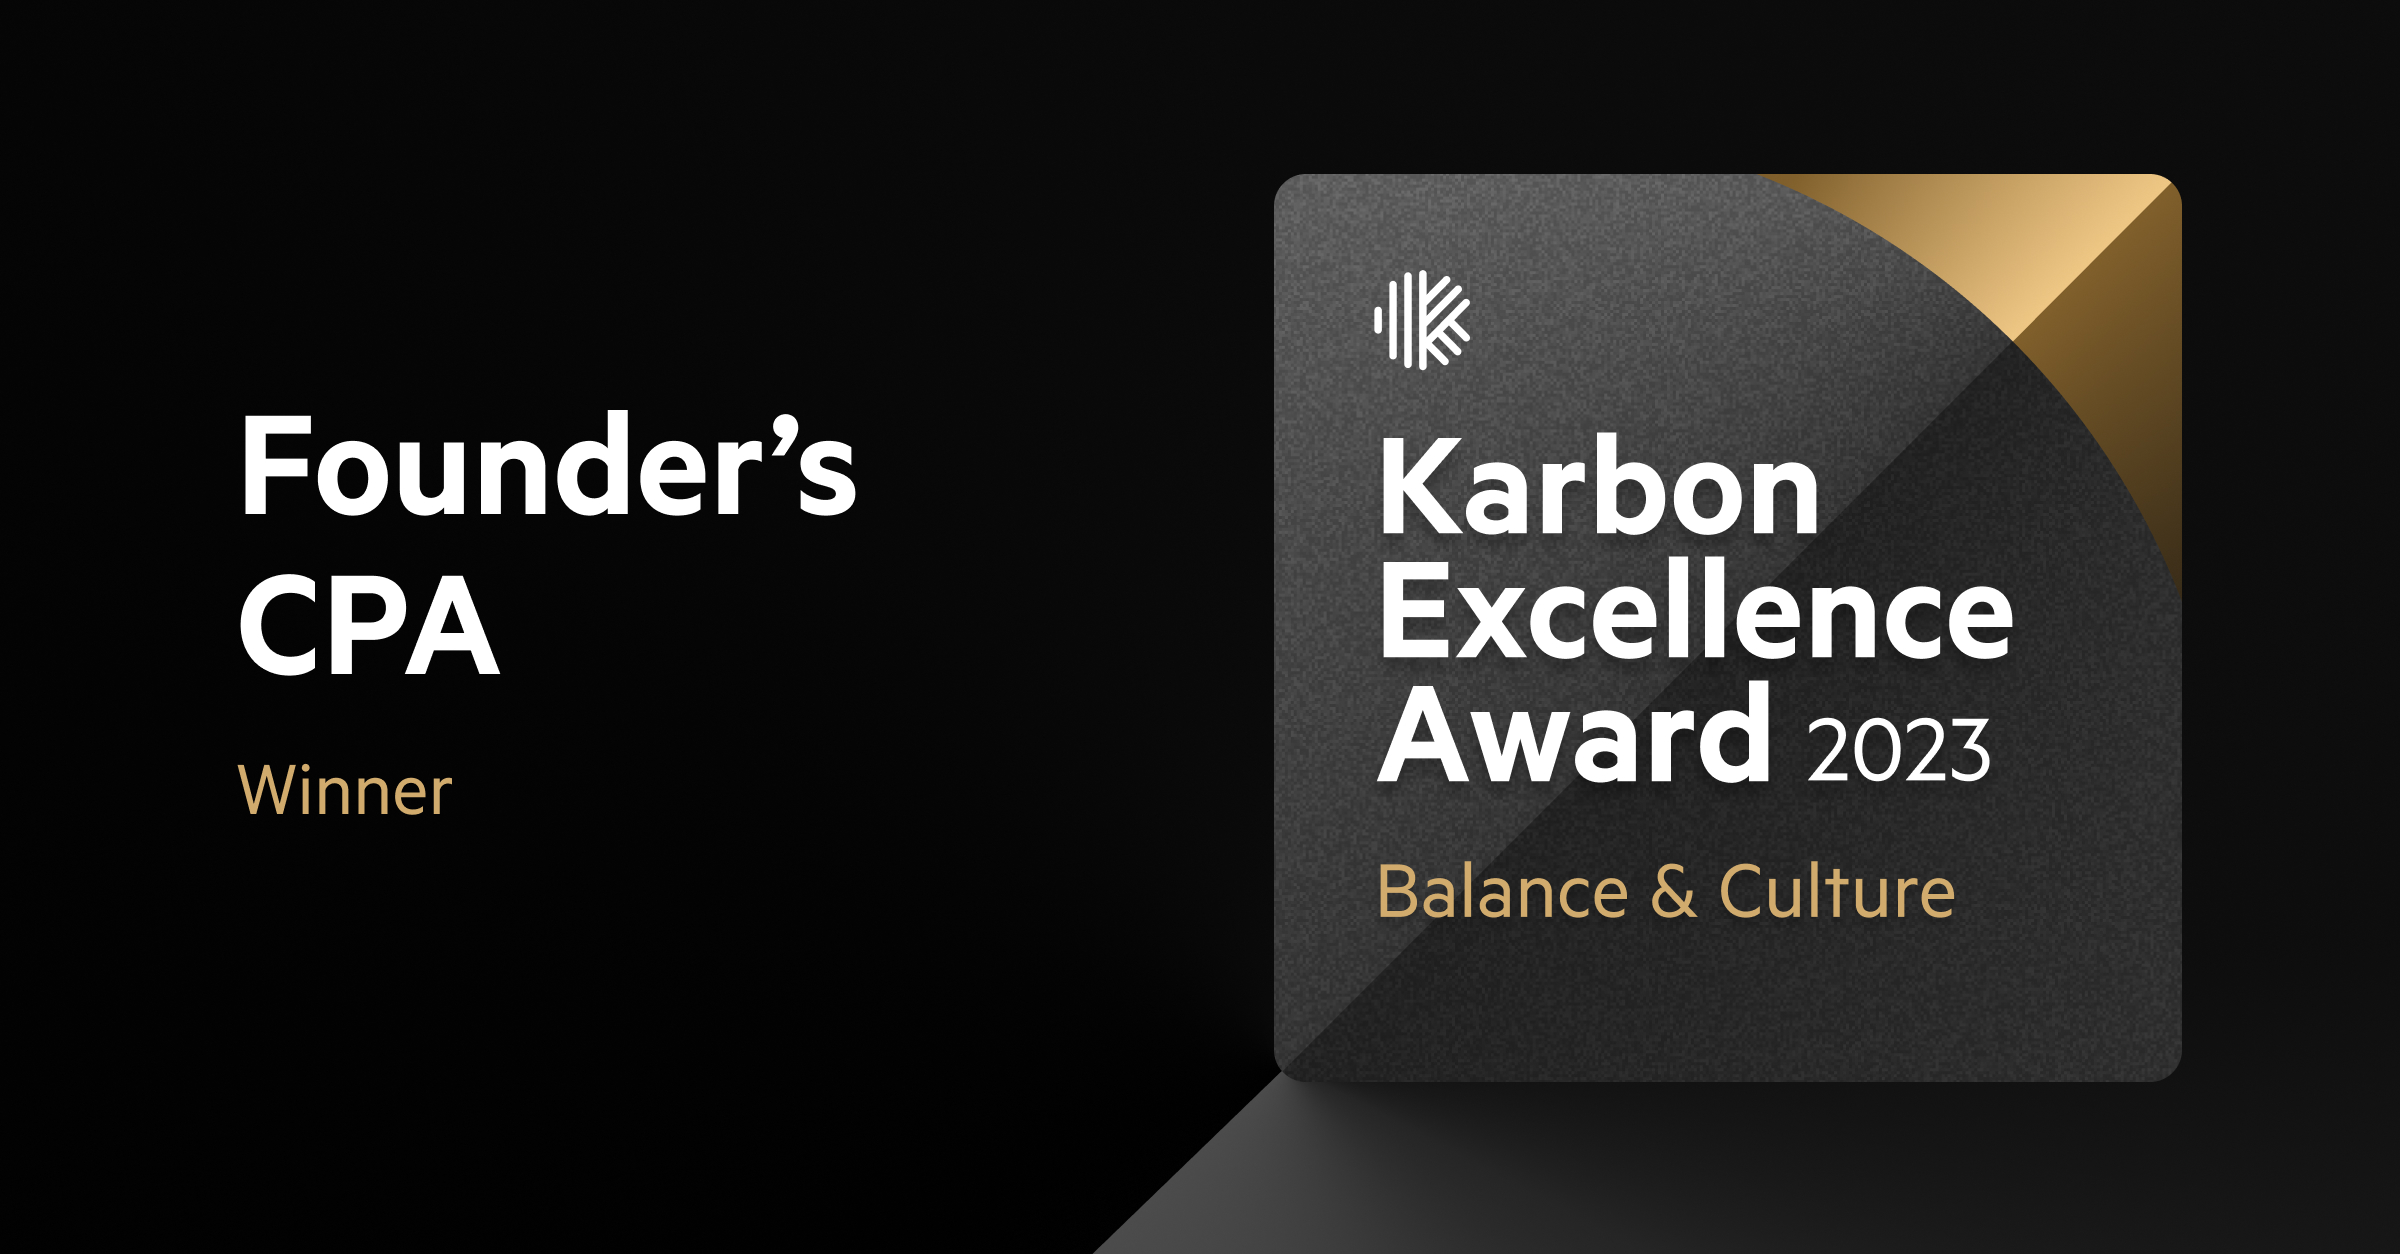 Karbon Excellence Award